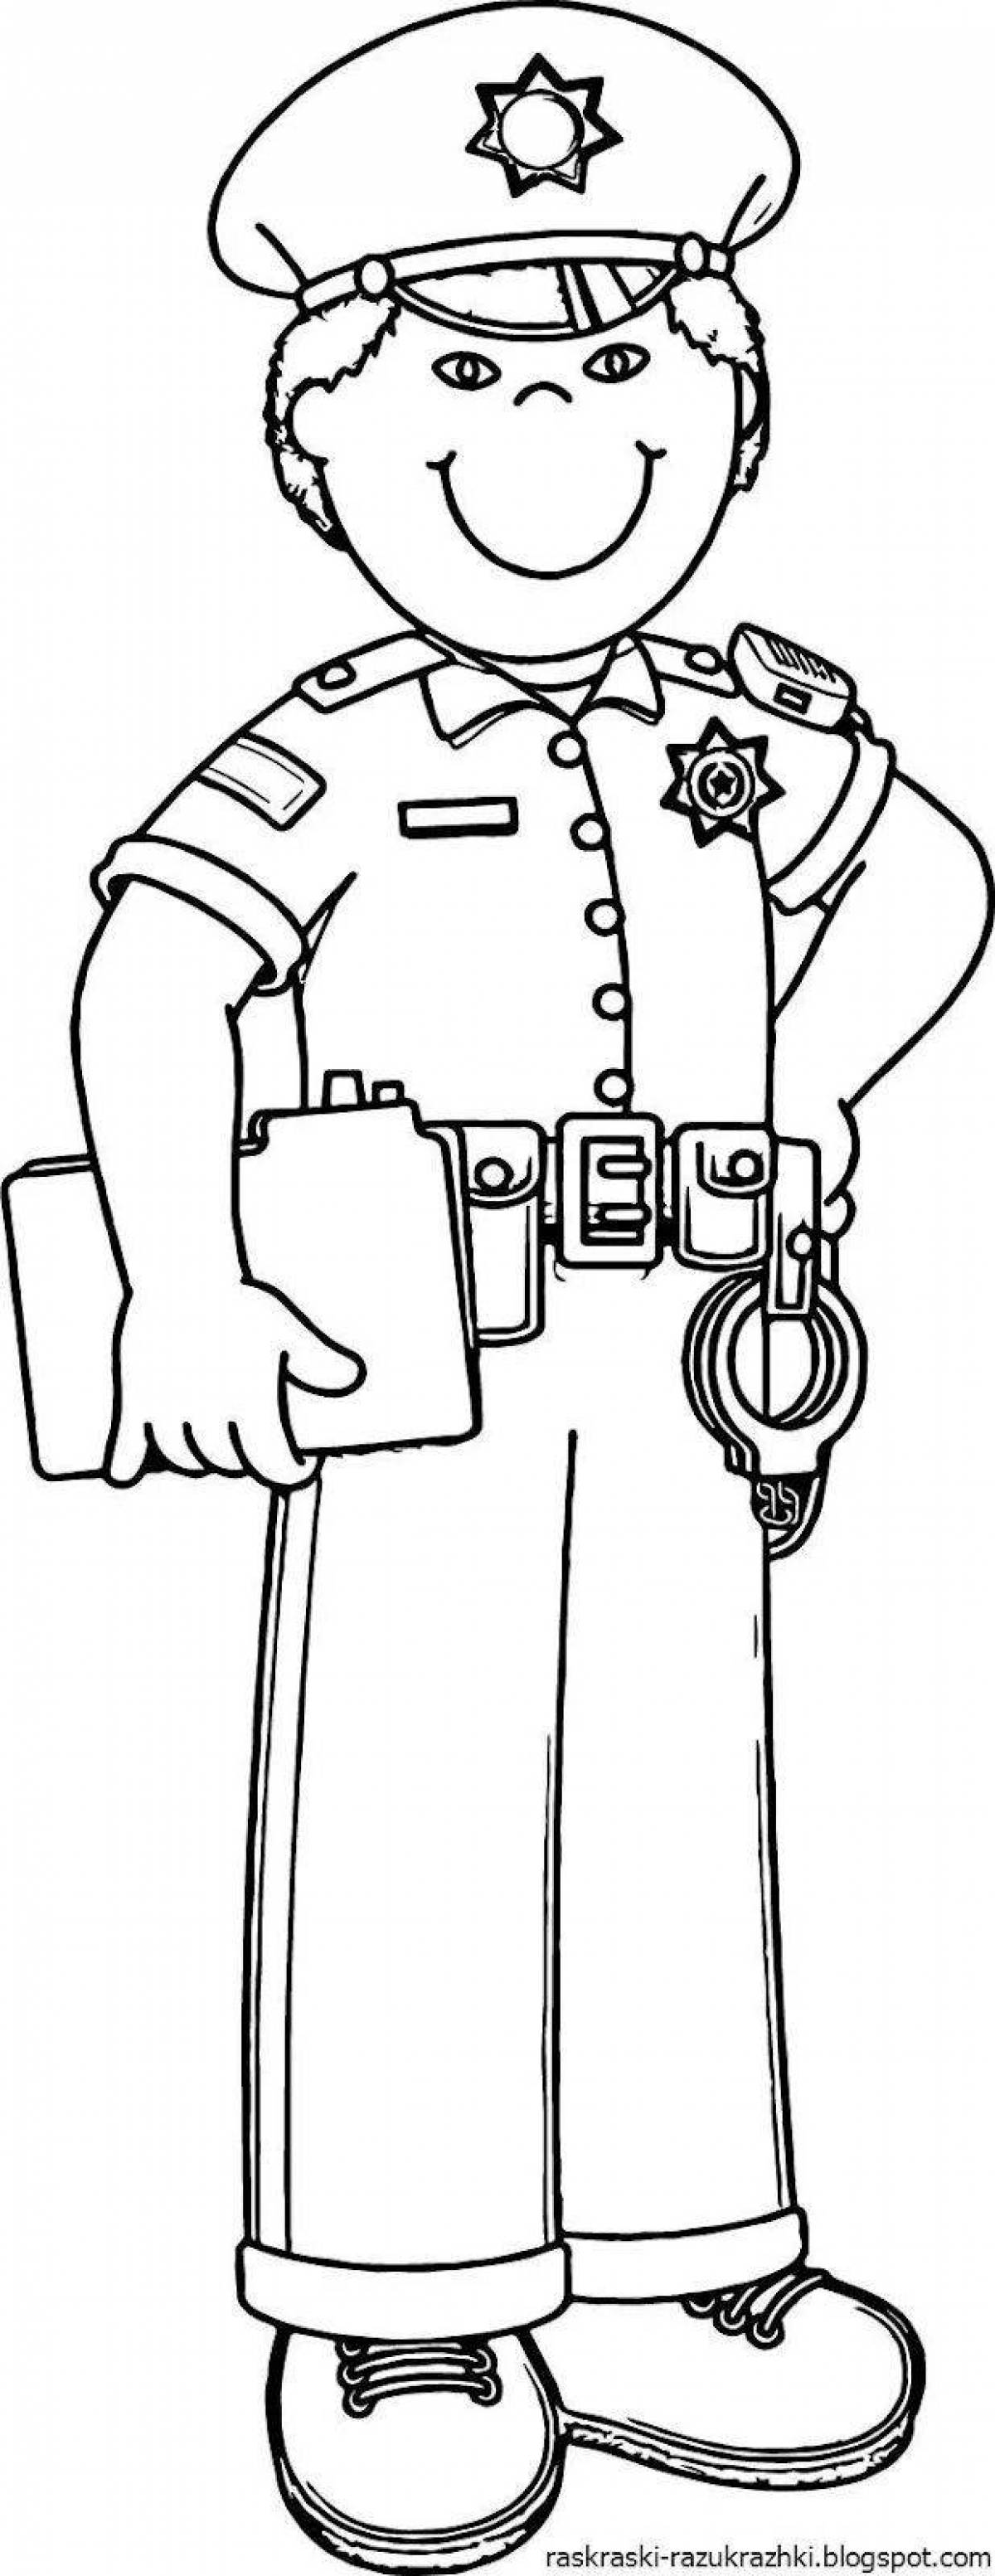 Police figurine glamor coloring book